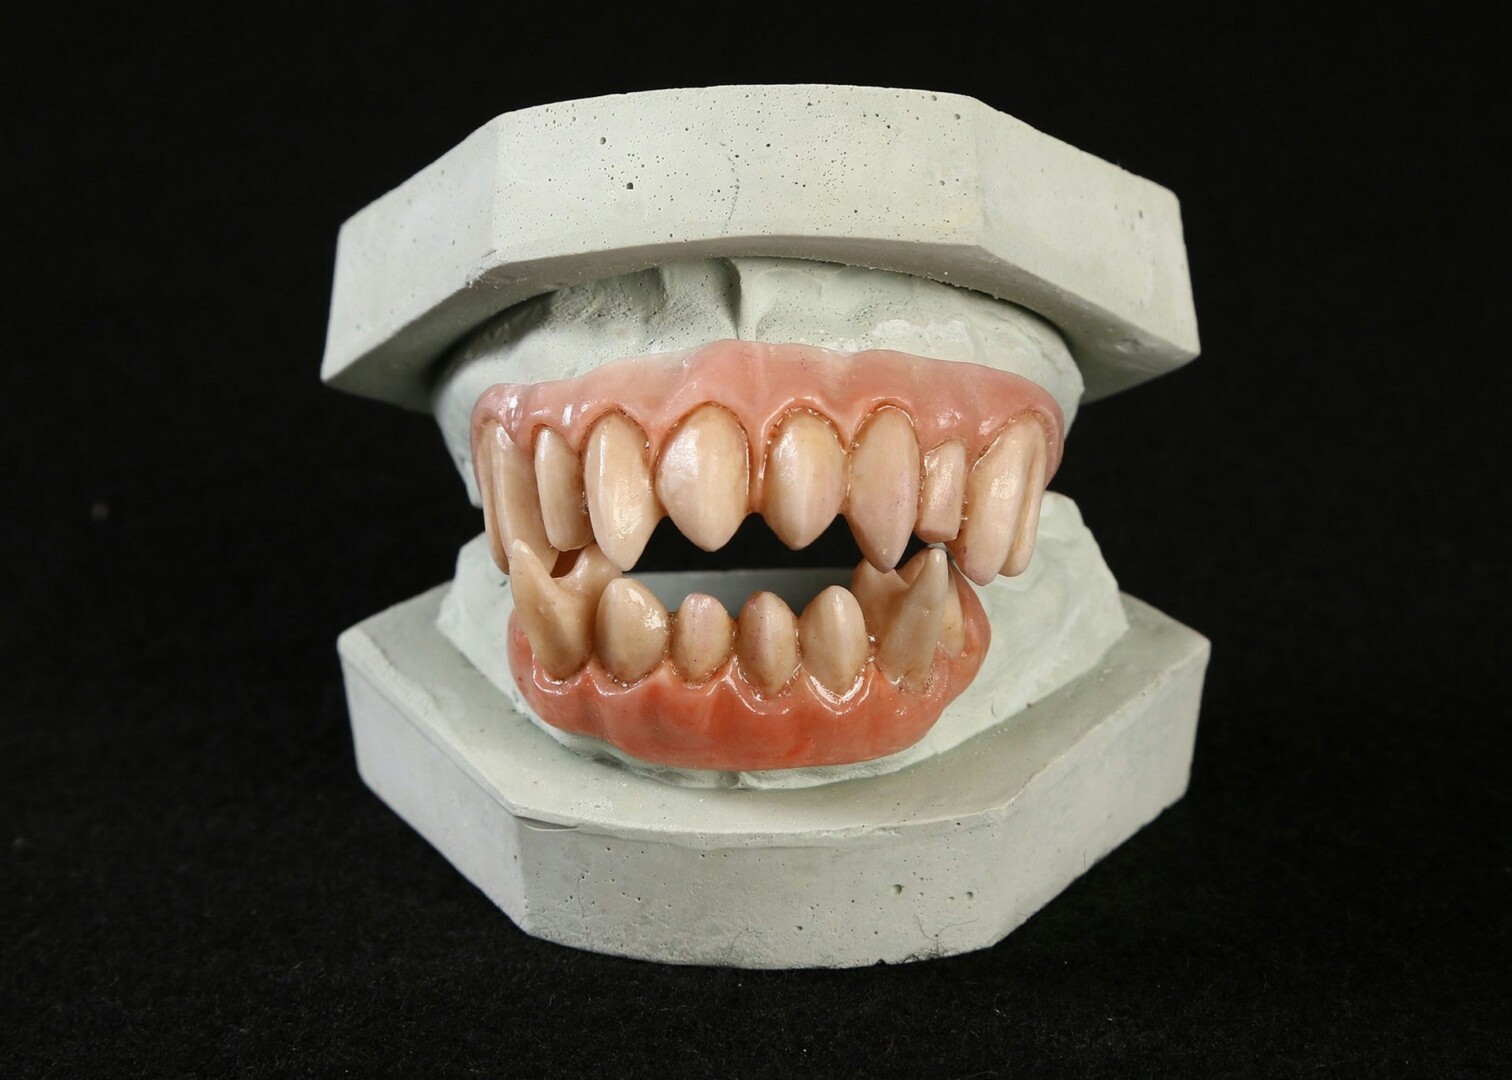 A fourth model of sharp, inhuman 3D printed teeth.